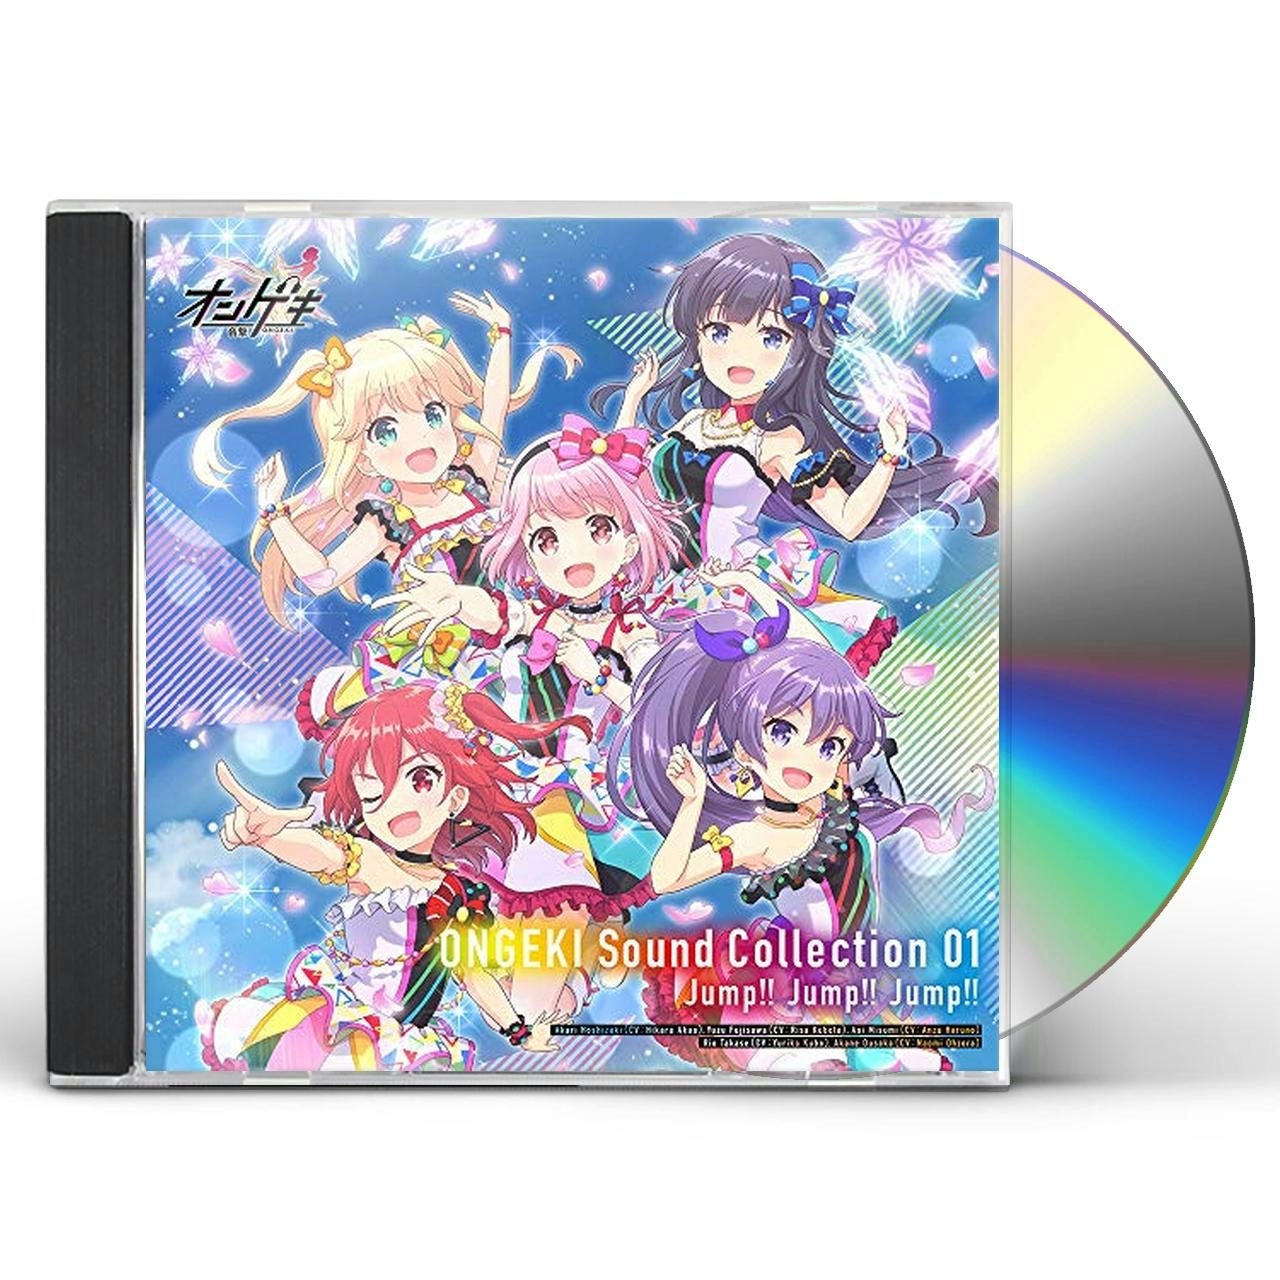 Game Music ONGEKI SOUND COLLECTION 01 (JUMP!! JUMP!! JUMP!!) CD